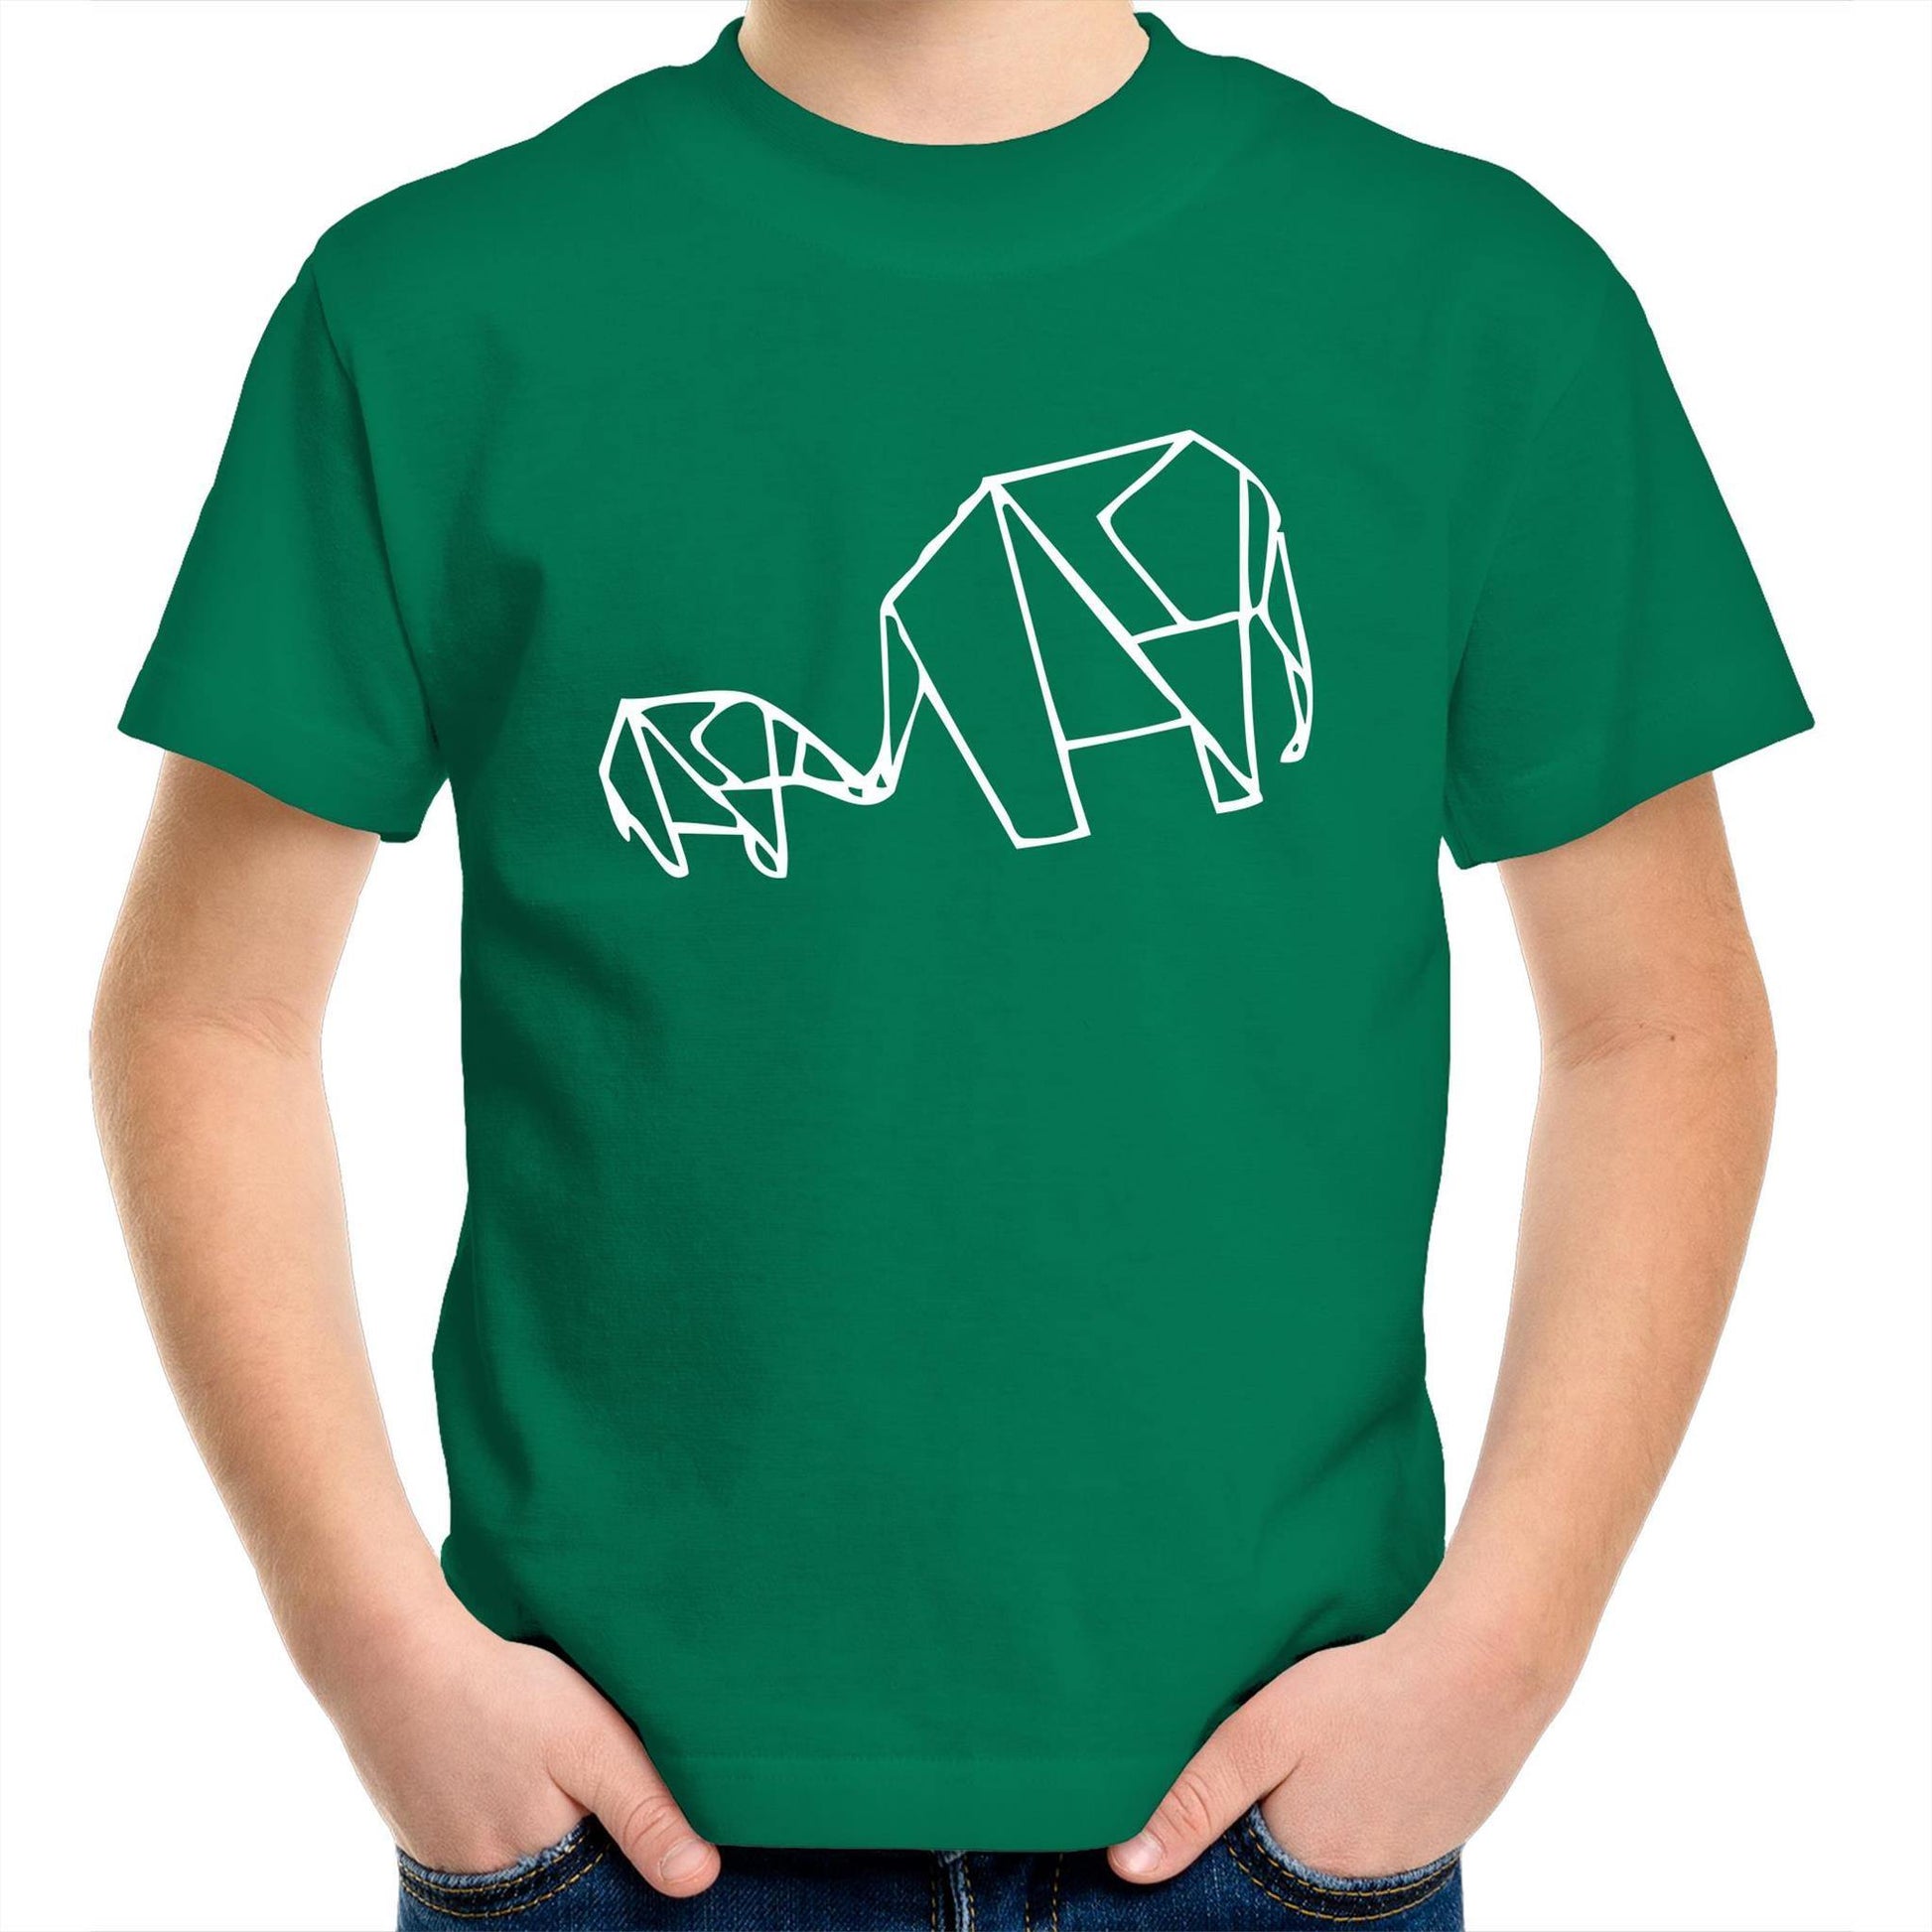 Origami Elephant - Kids Youth Crew T-Shirt Kelly Green Kids Youth T-shirt animal